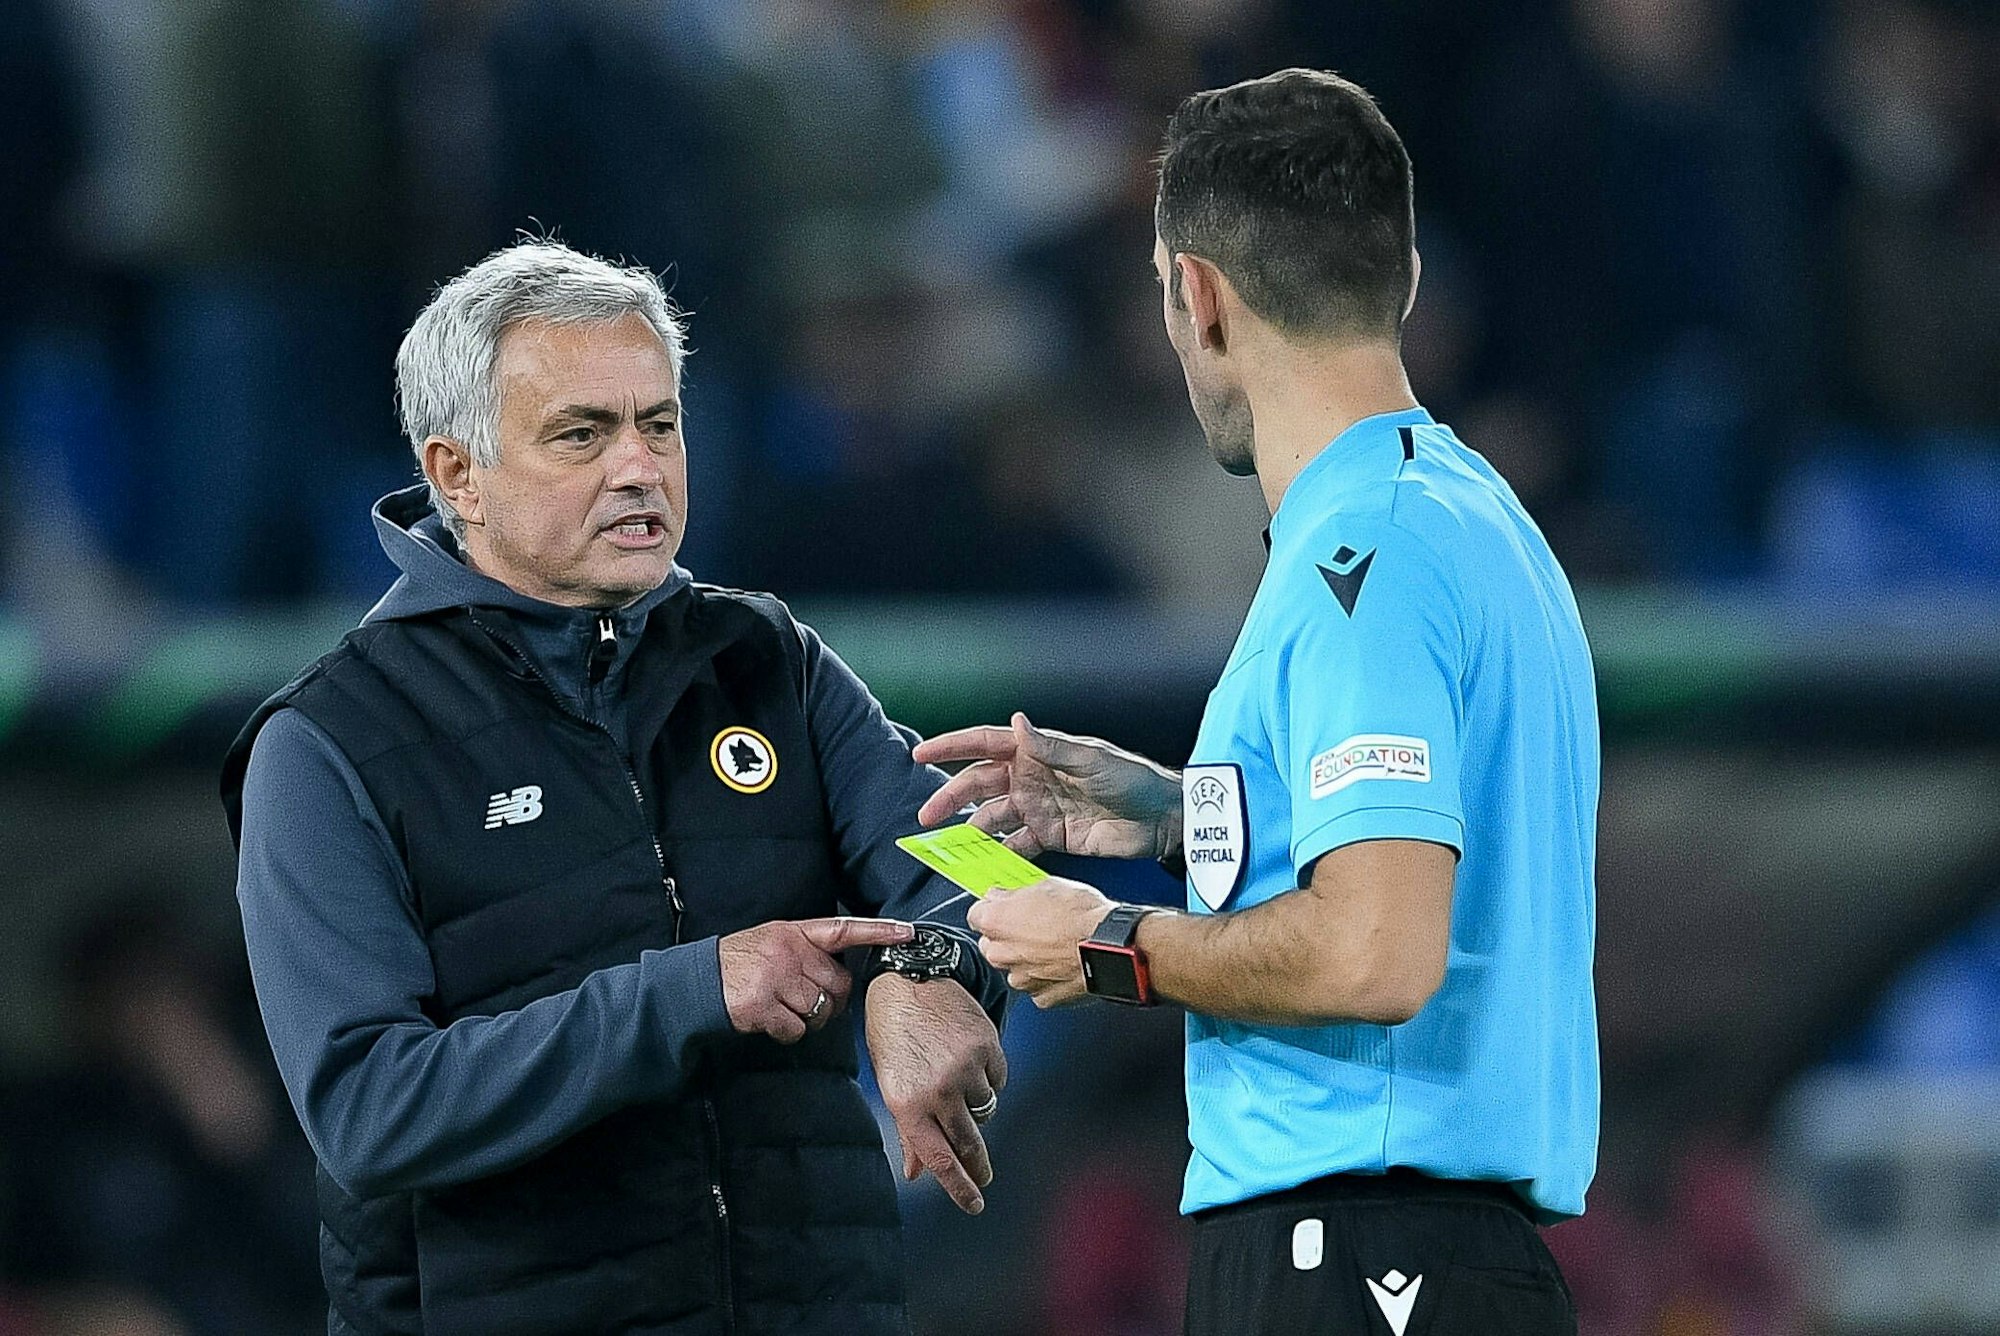 Jose Mourinho diskutiert mit dem Schiedsrichter.